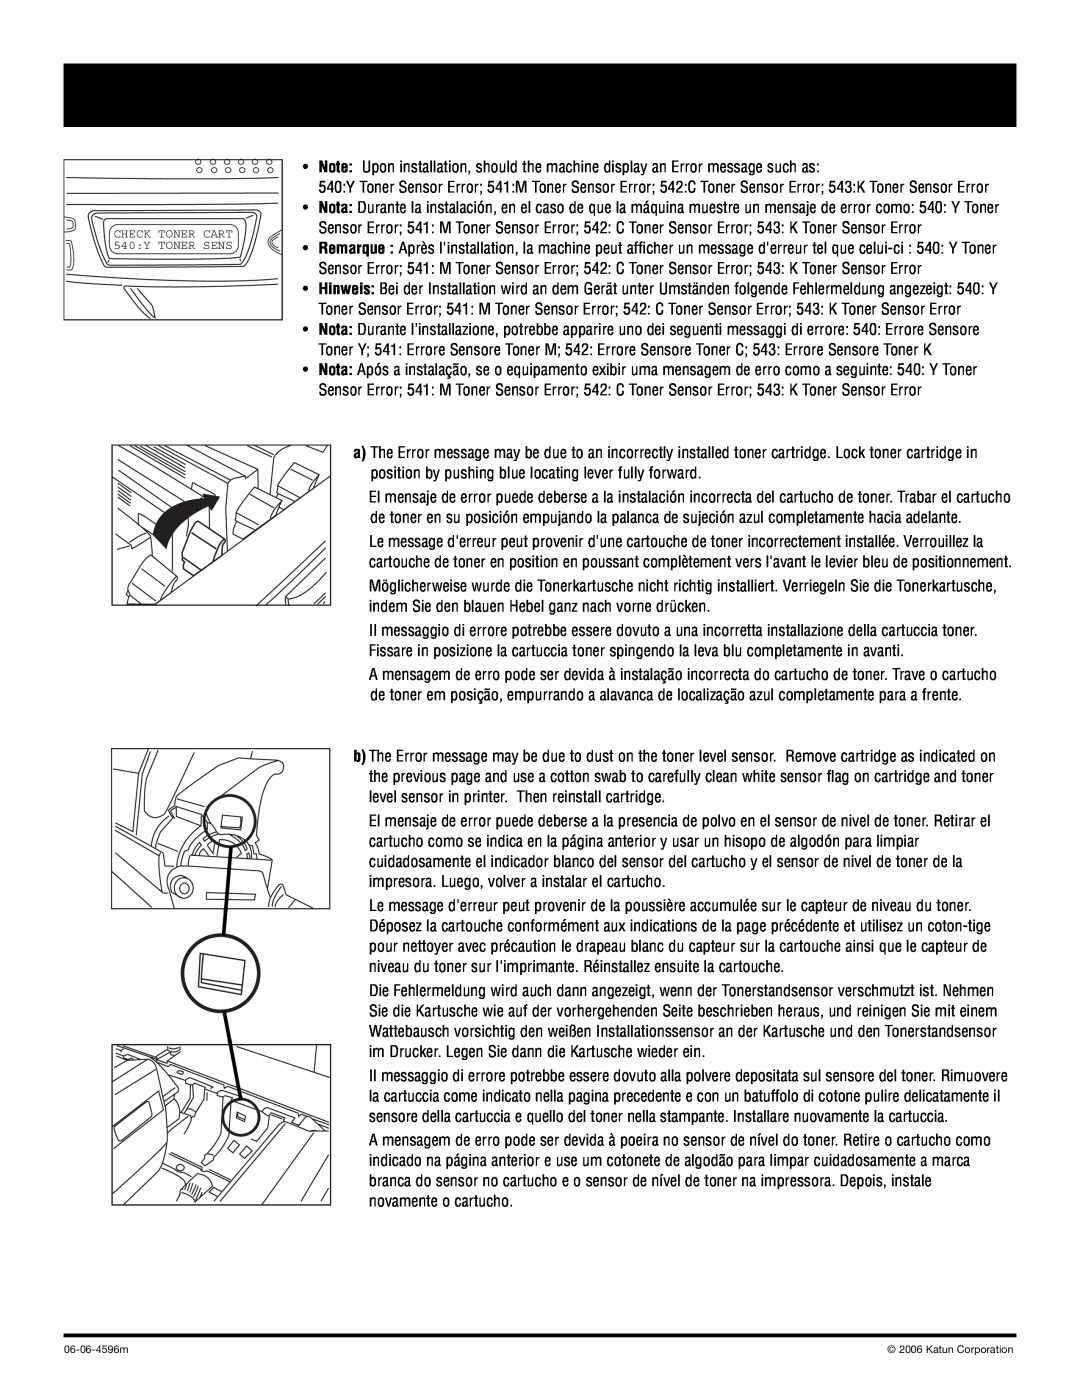 Oki C5000-series installation instructions CHECK TONER CART 540Y TONER SENS 